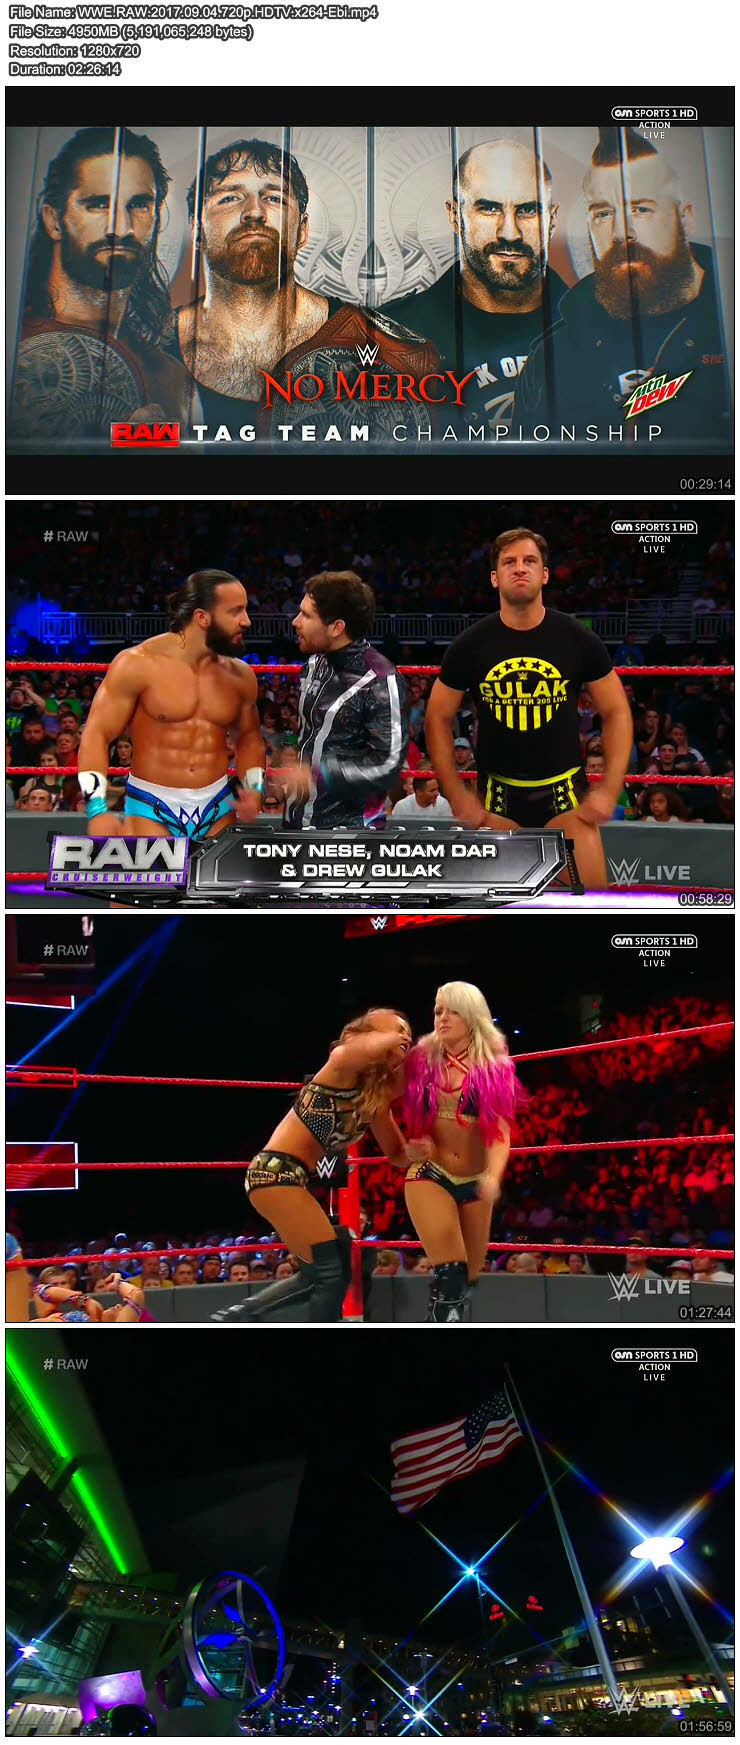 [WWE] RAW.2017.09.04.720p HDTV.x264-Ebi